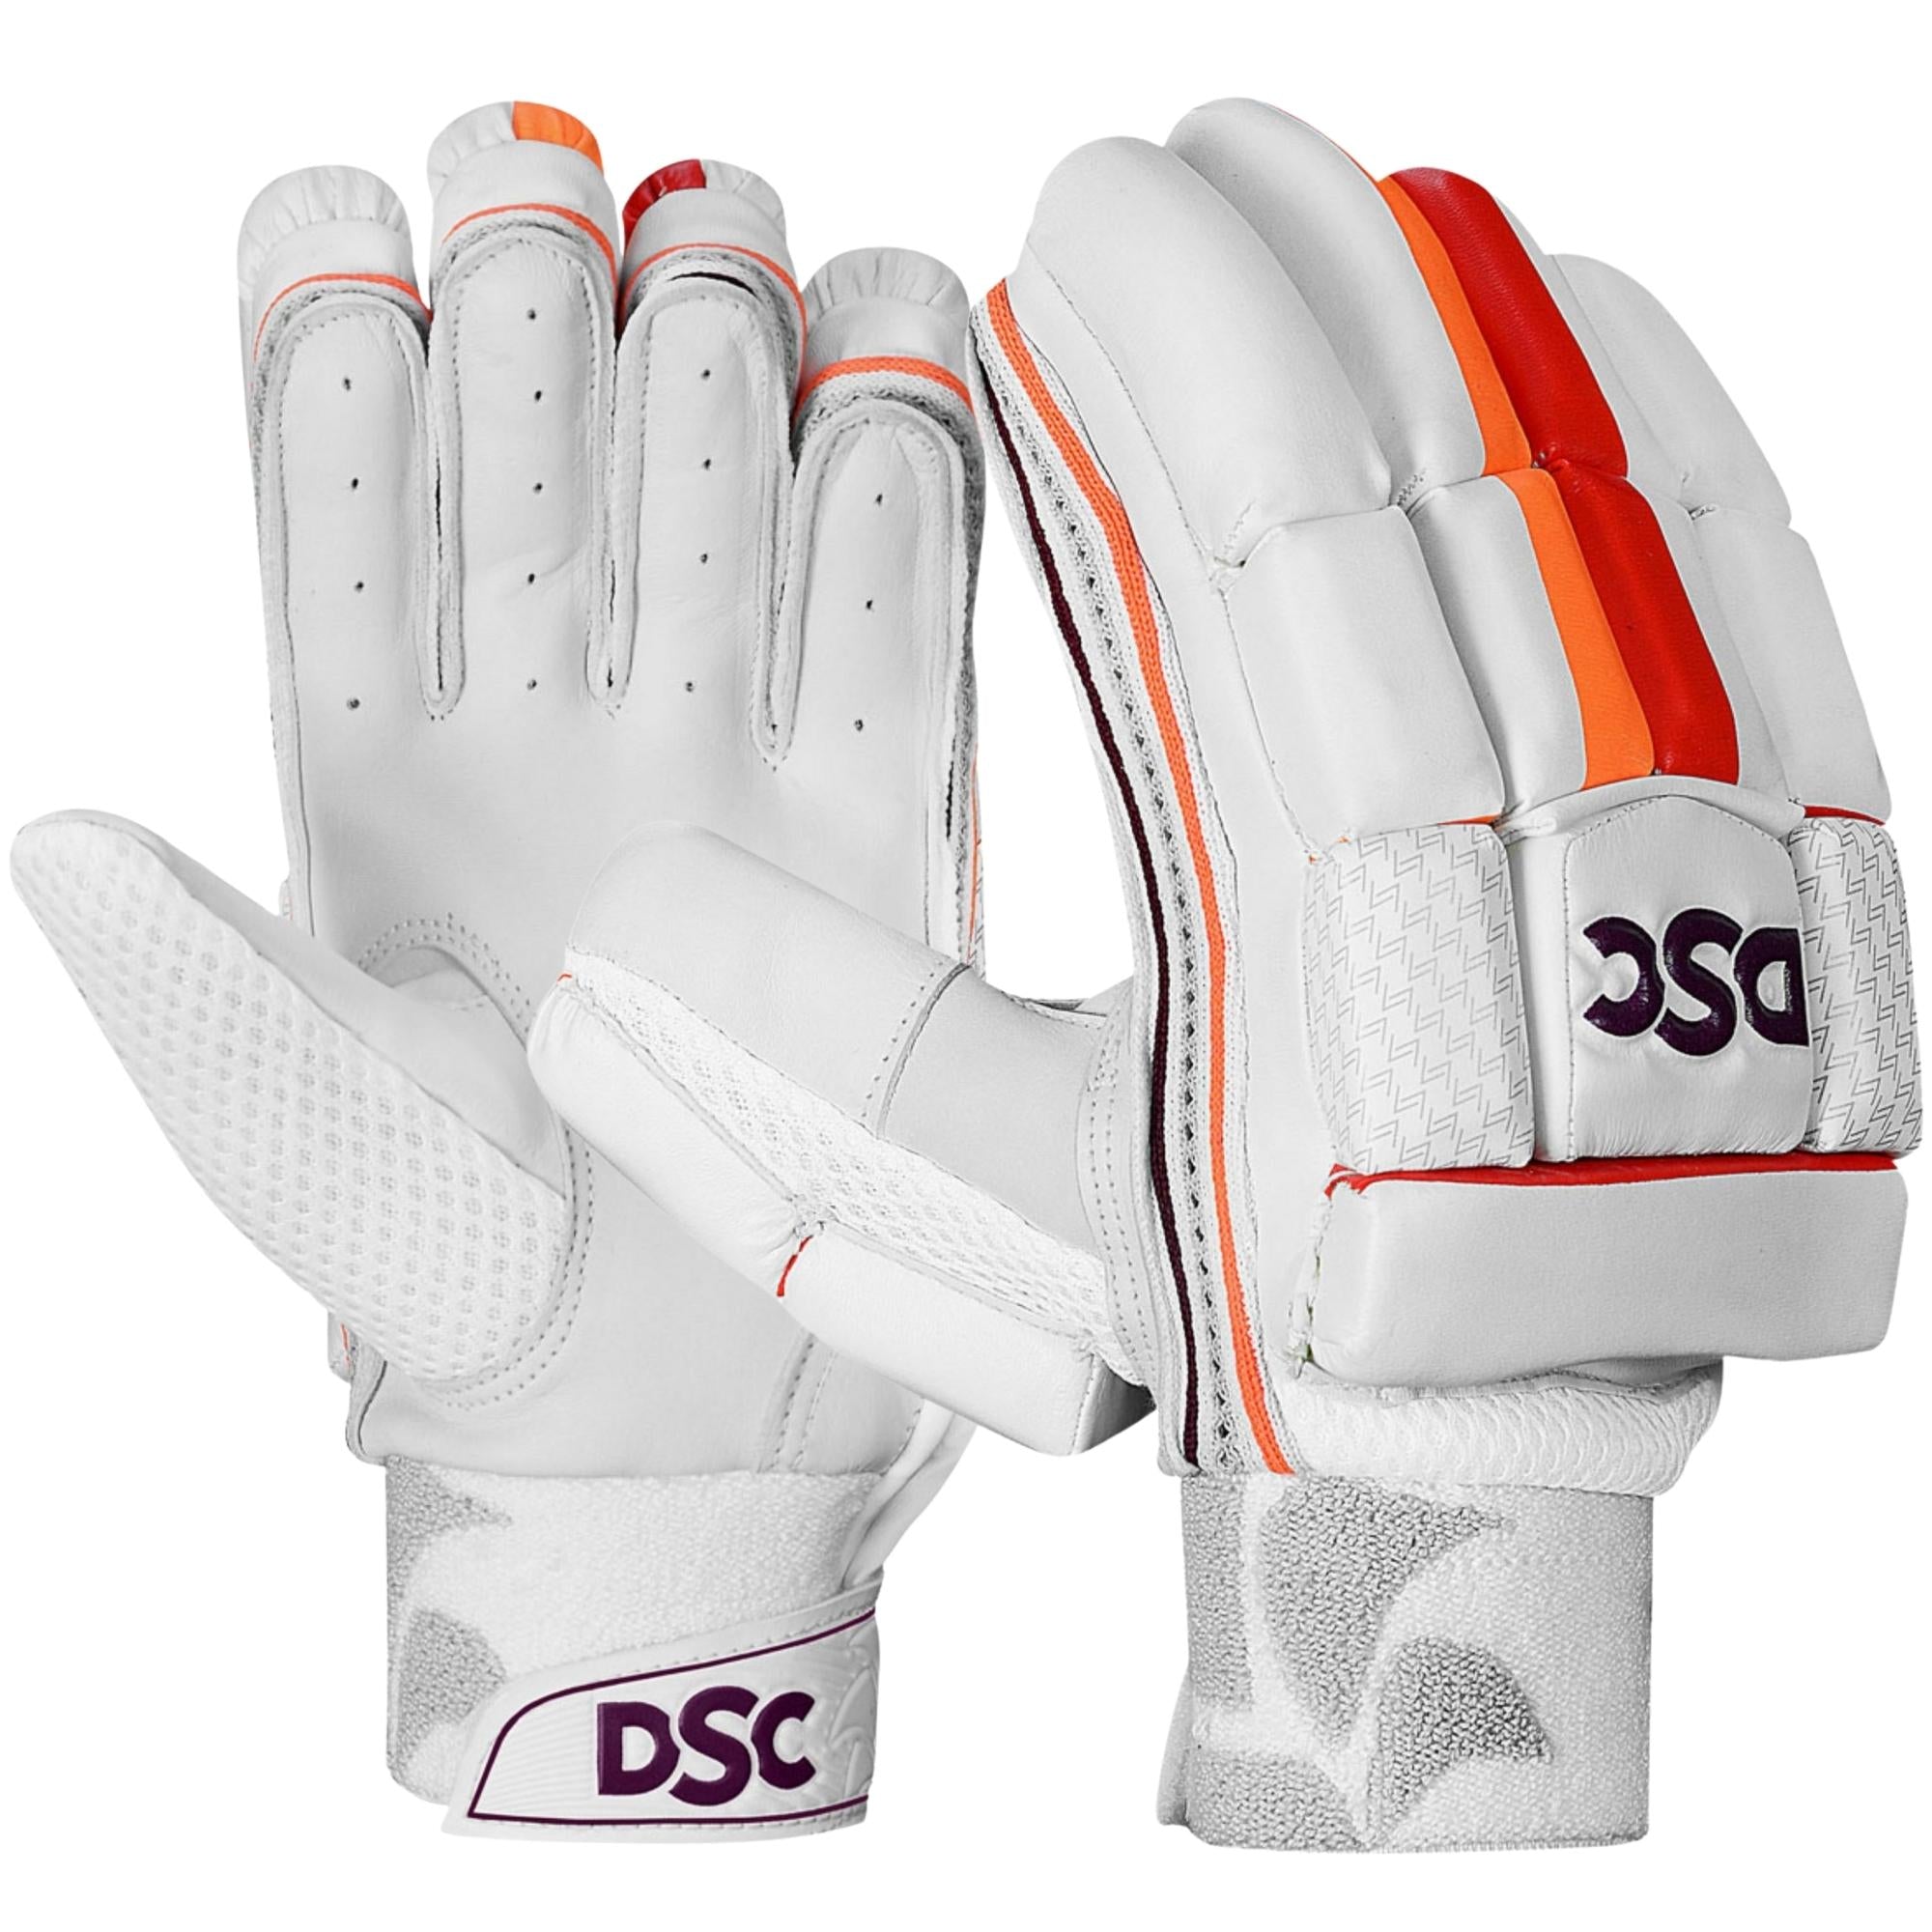 DSC Batting Gloves Intense Shock